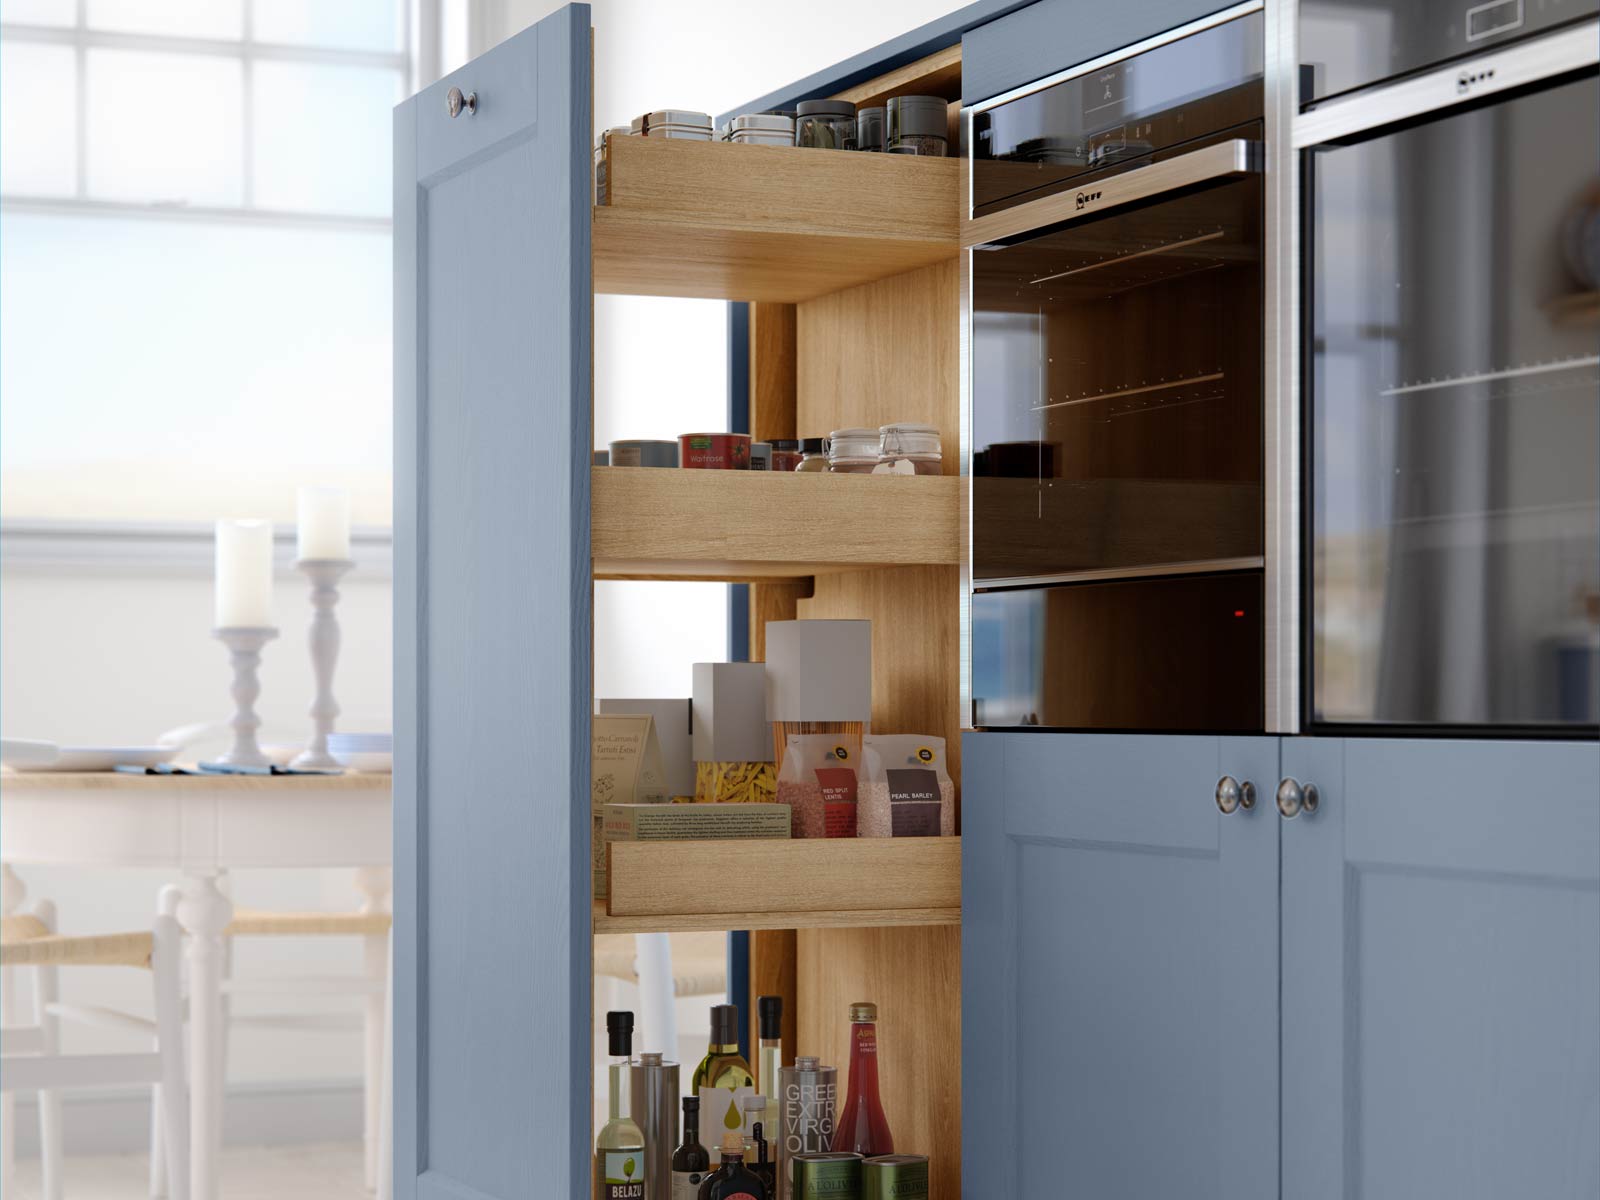 A pull-out cabinet kitchen corner larder unit with powder blue kitchen facades